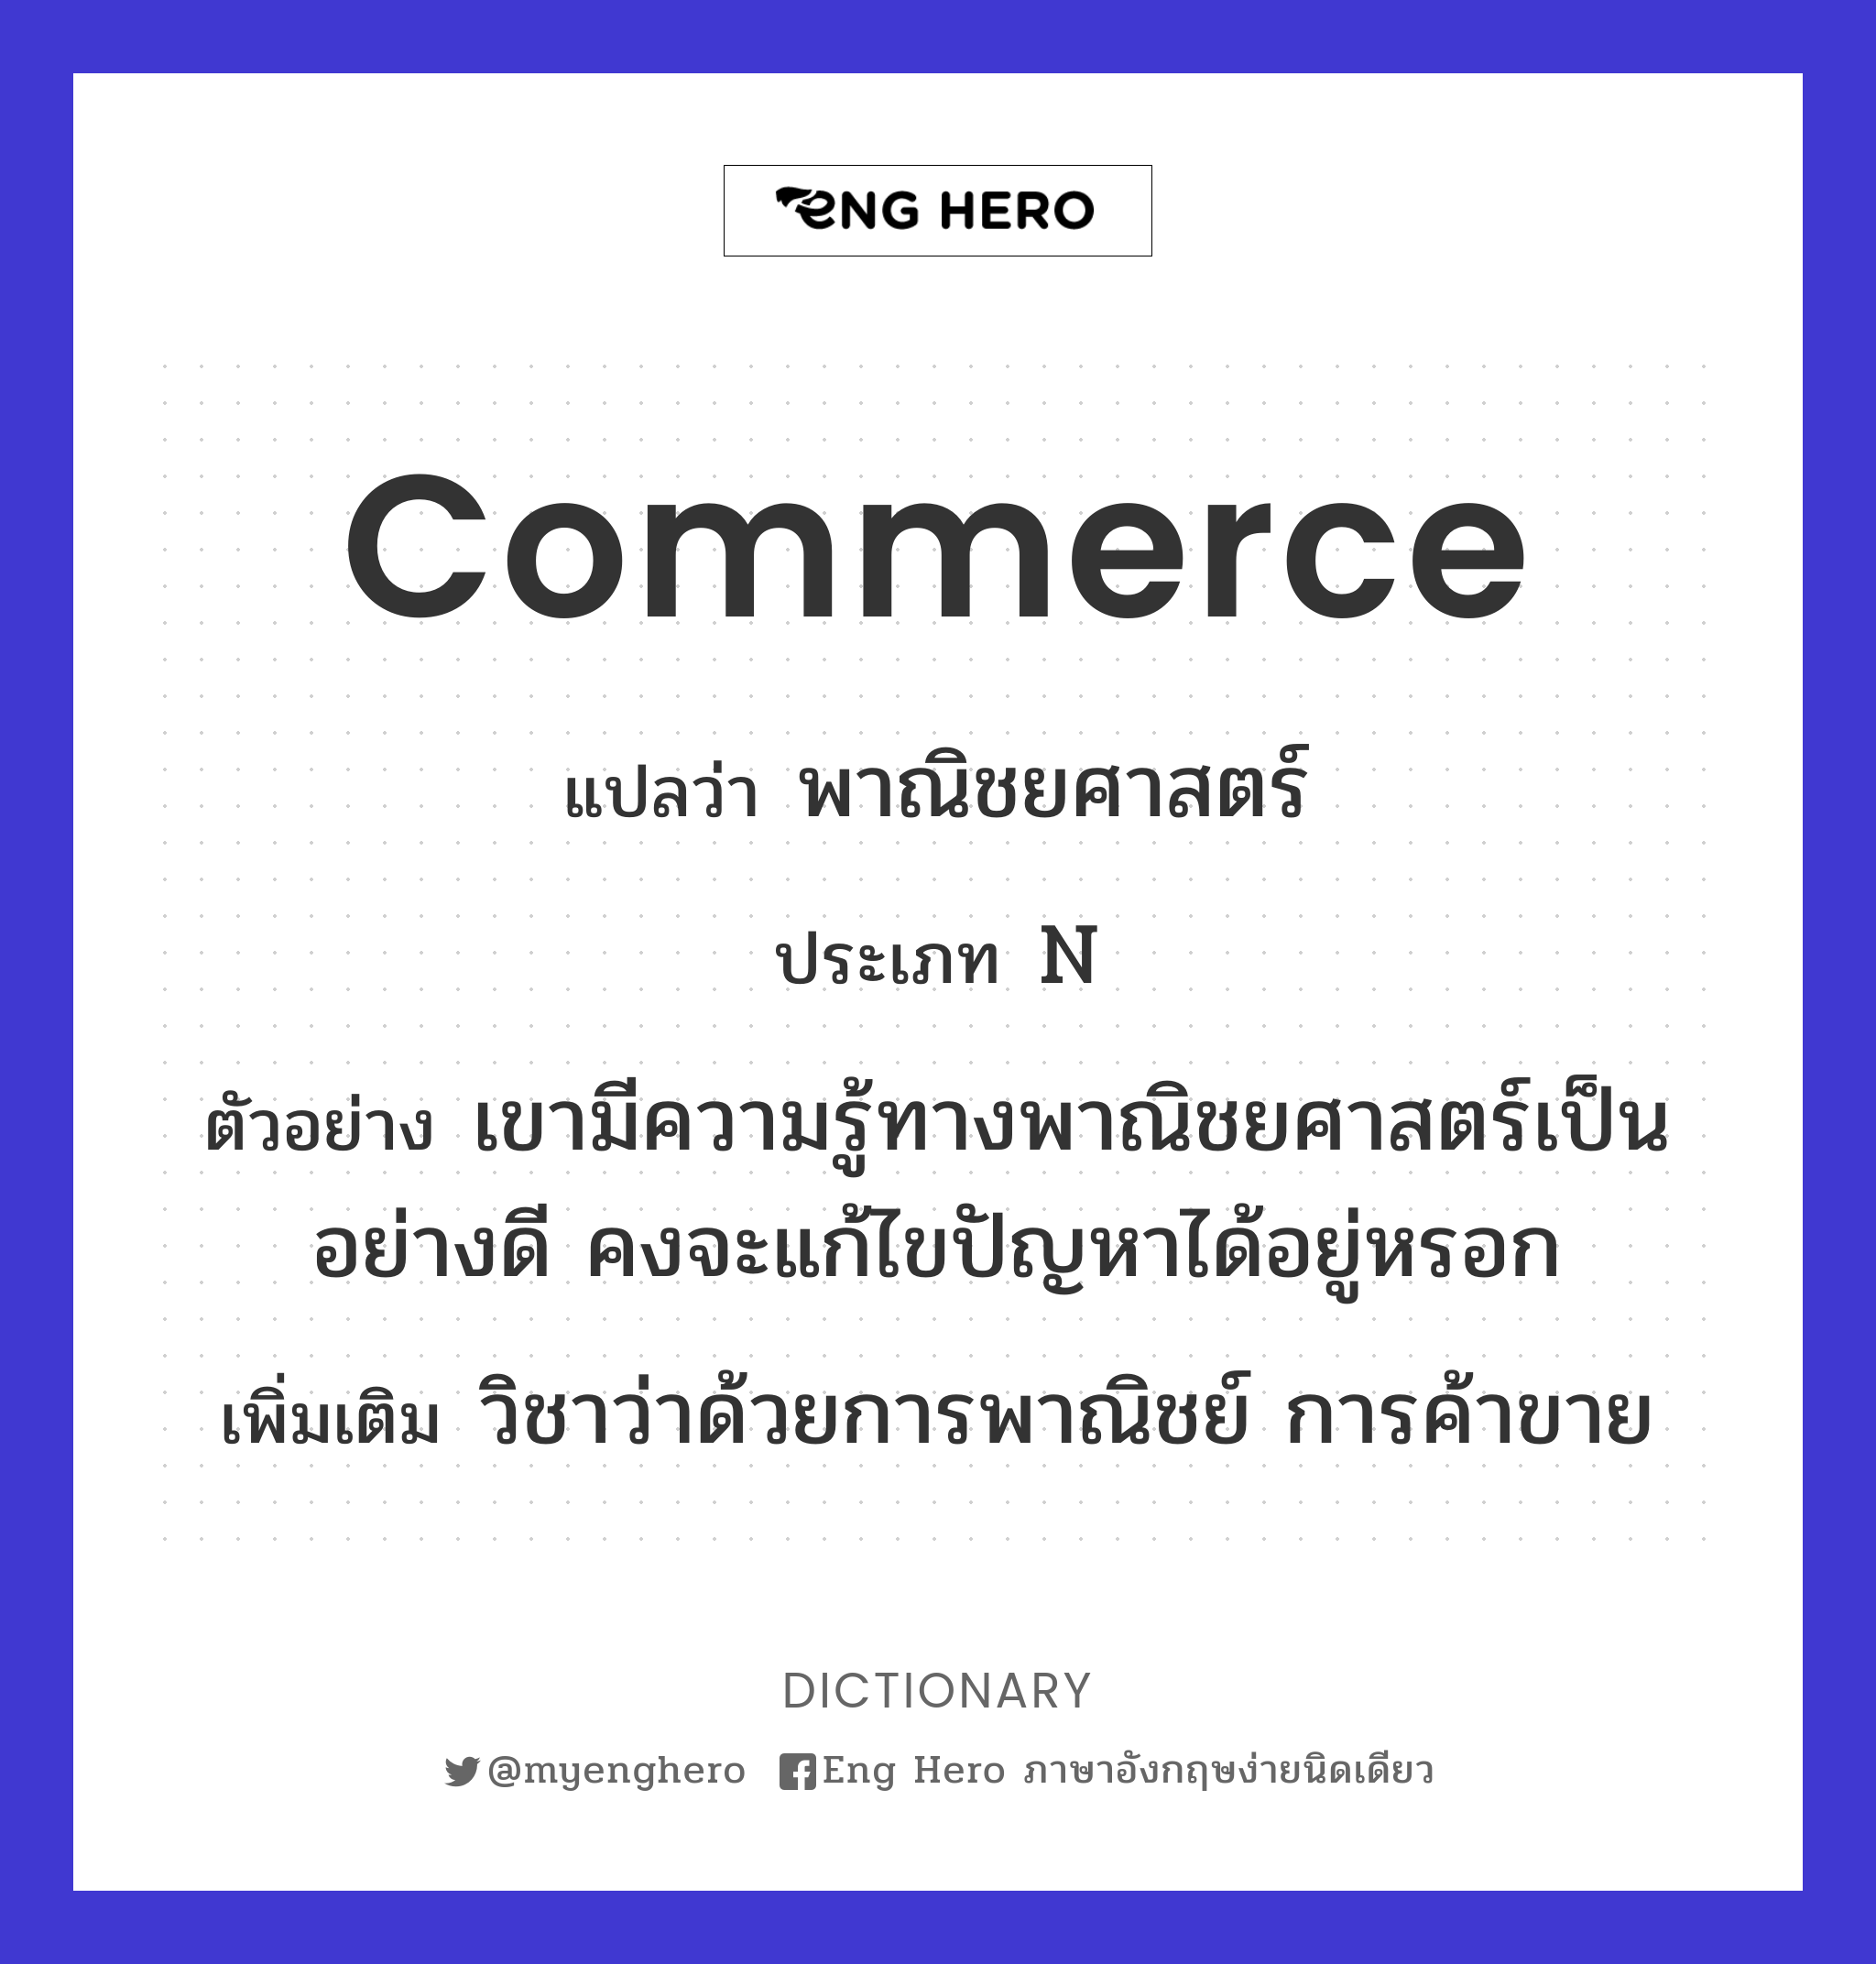 commerce